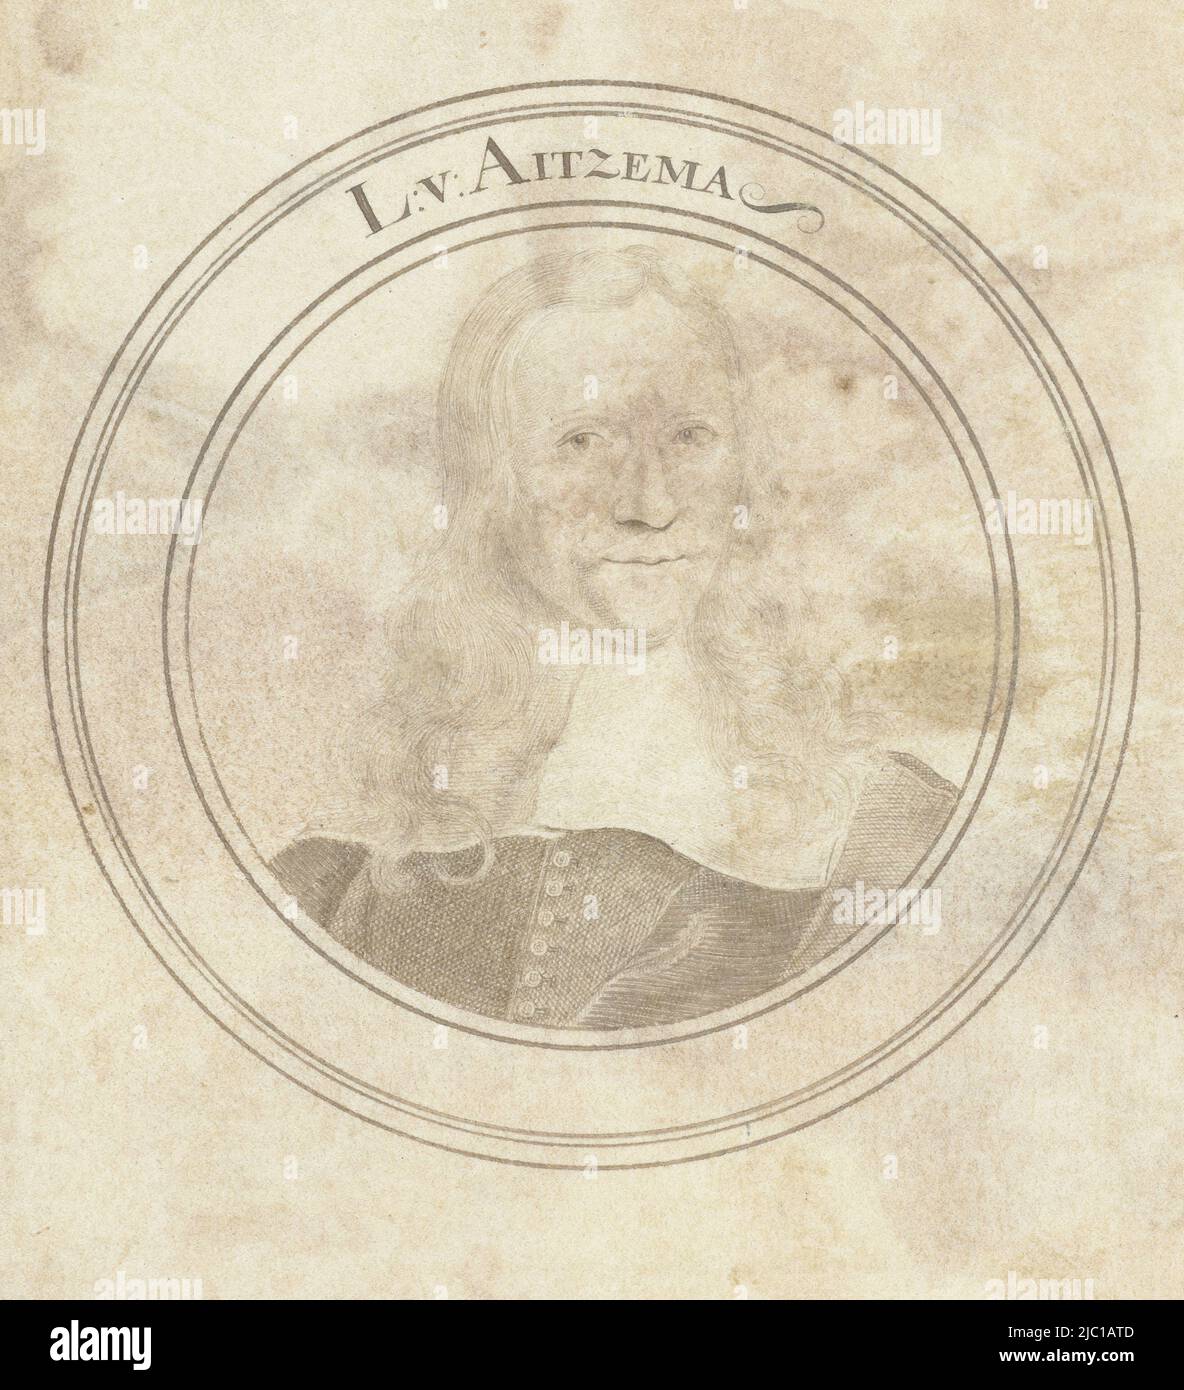 Ritratto di Lieuwe van Aitzema, disegnatore: John Faber (i), 1660 - 1721, pergamena (materiale animale), penna, h 115 mm x l 105 mm, d 70 mm Foto Stock